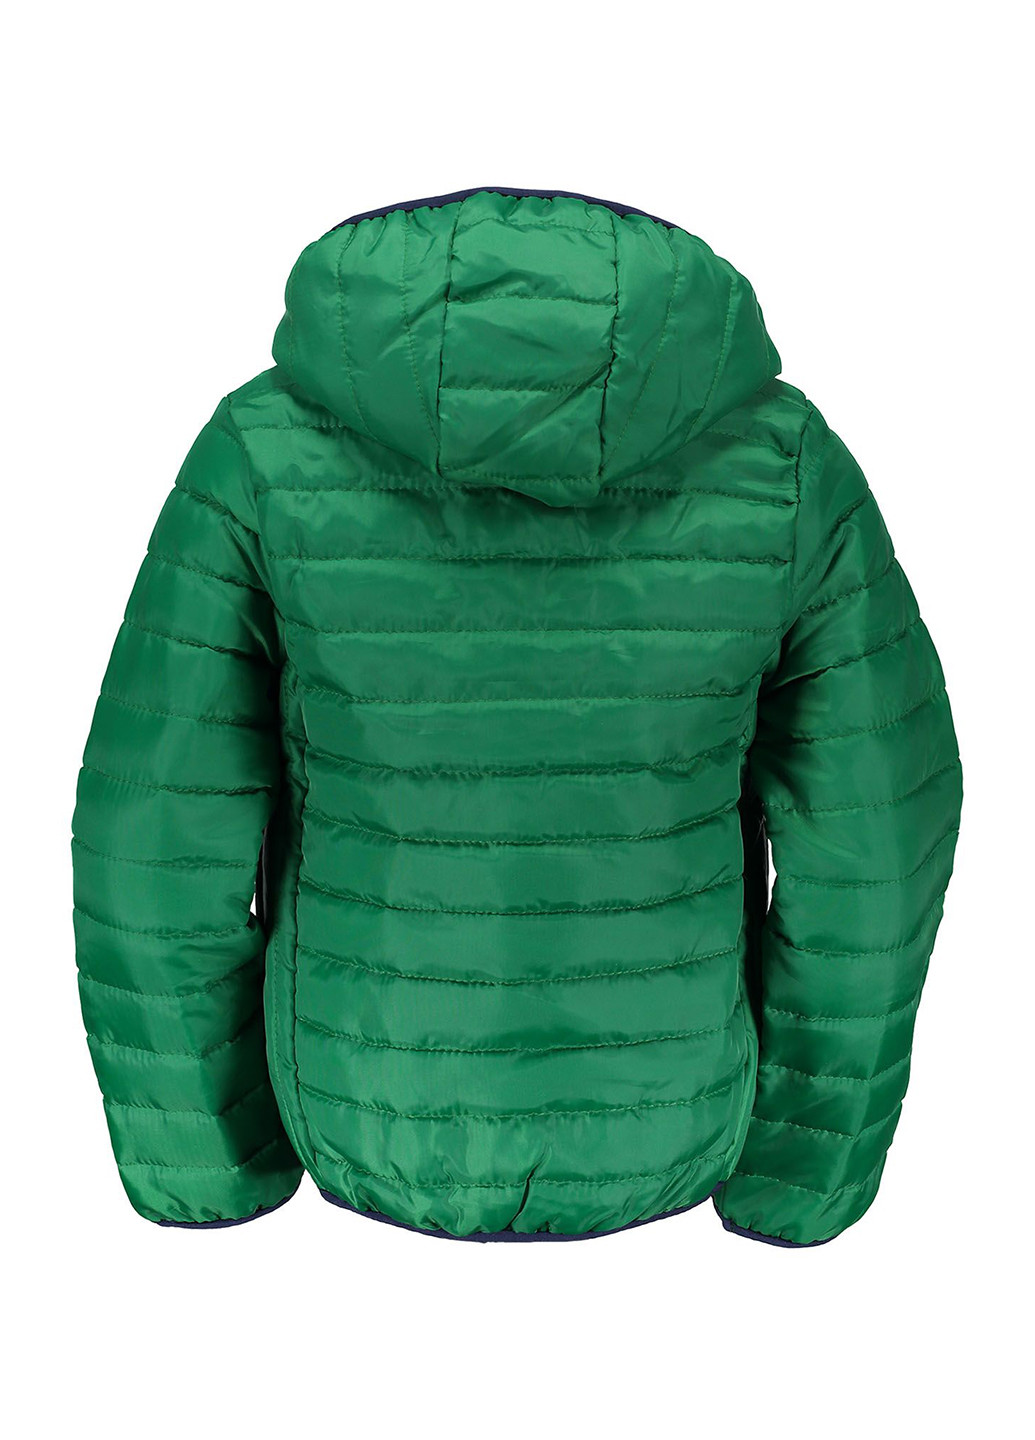 Зеленая демисезонная куртка Piazza Italia